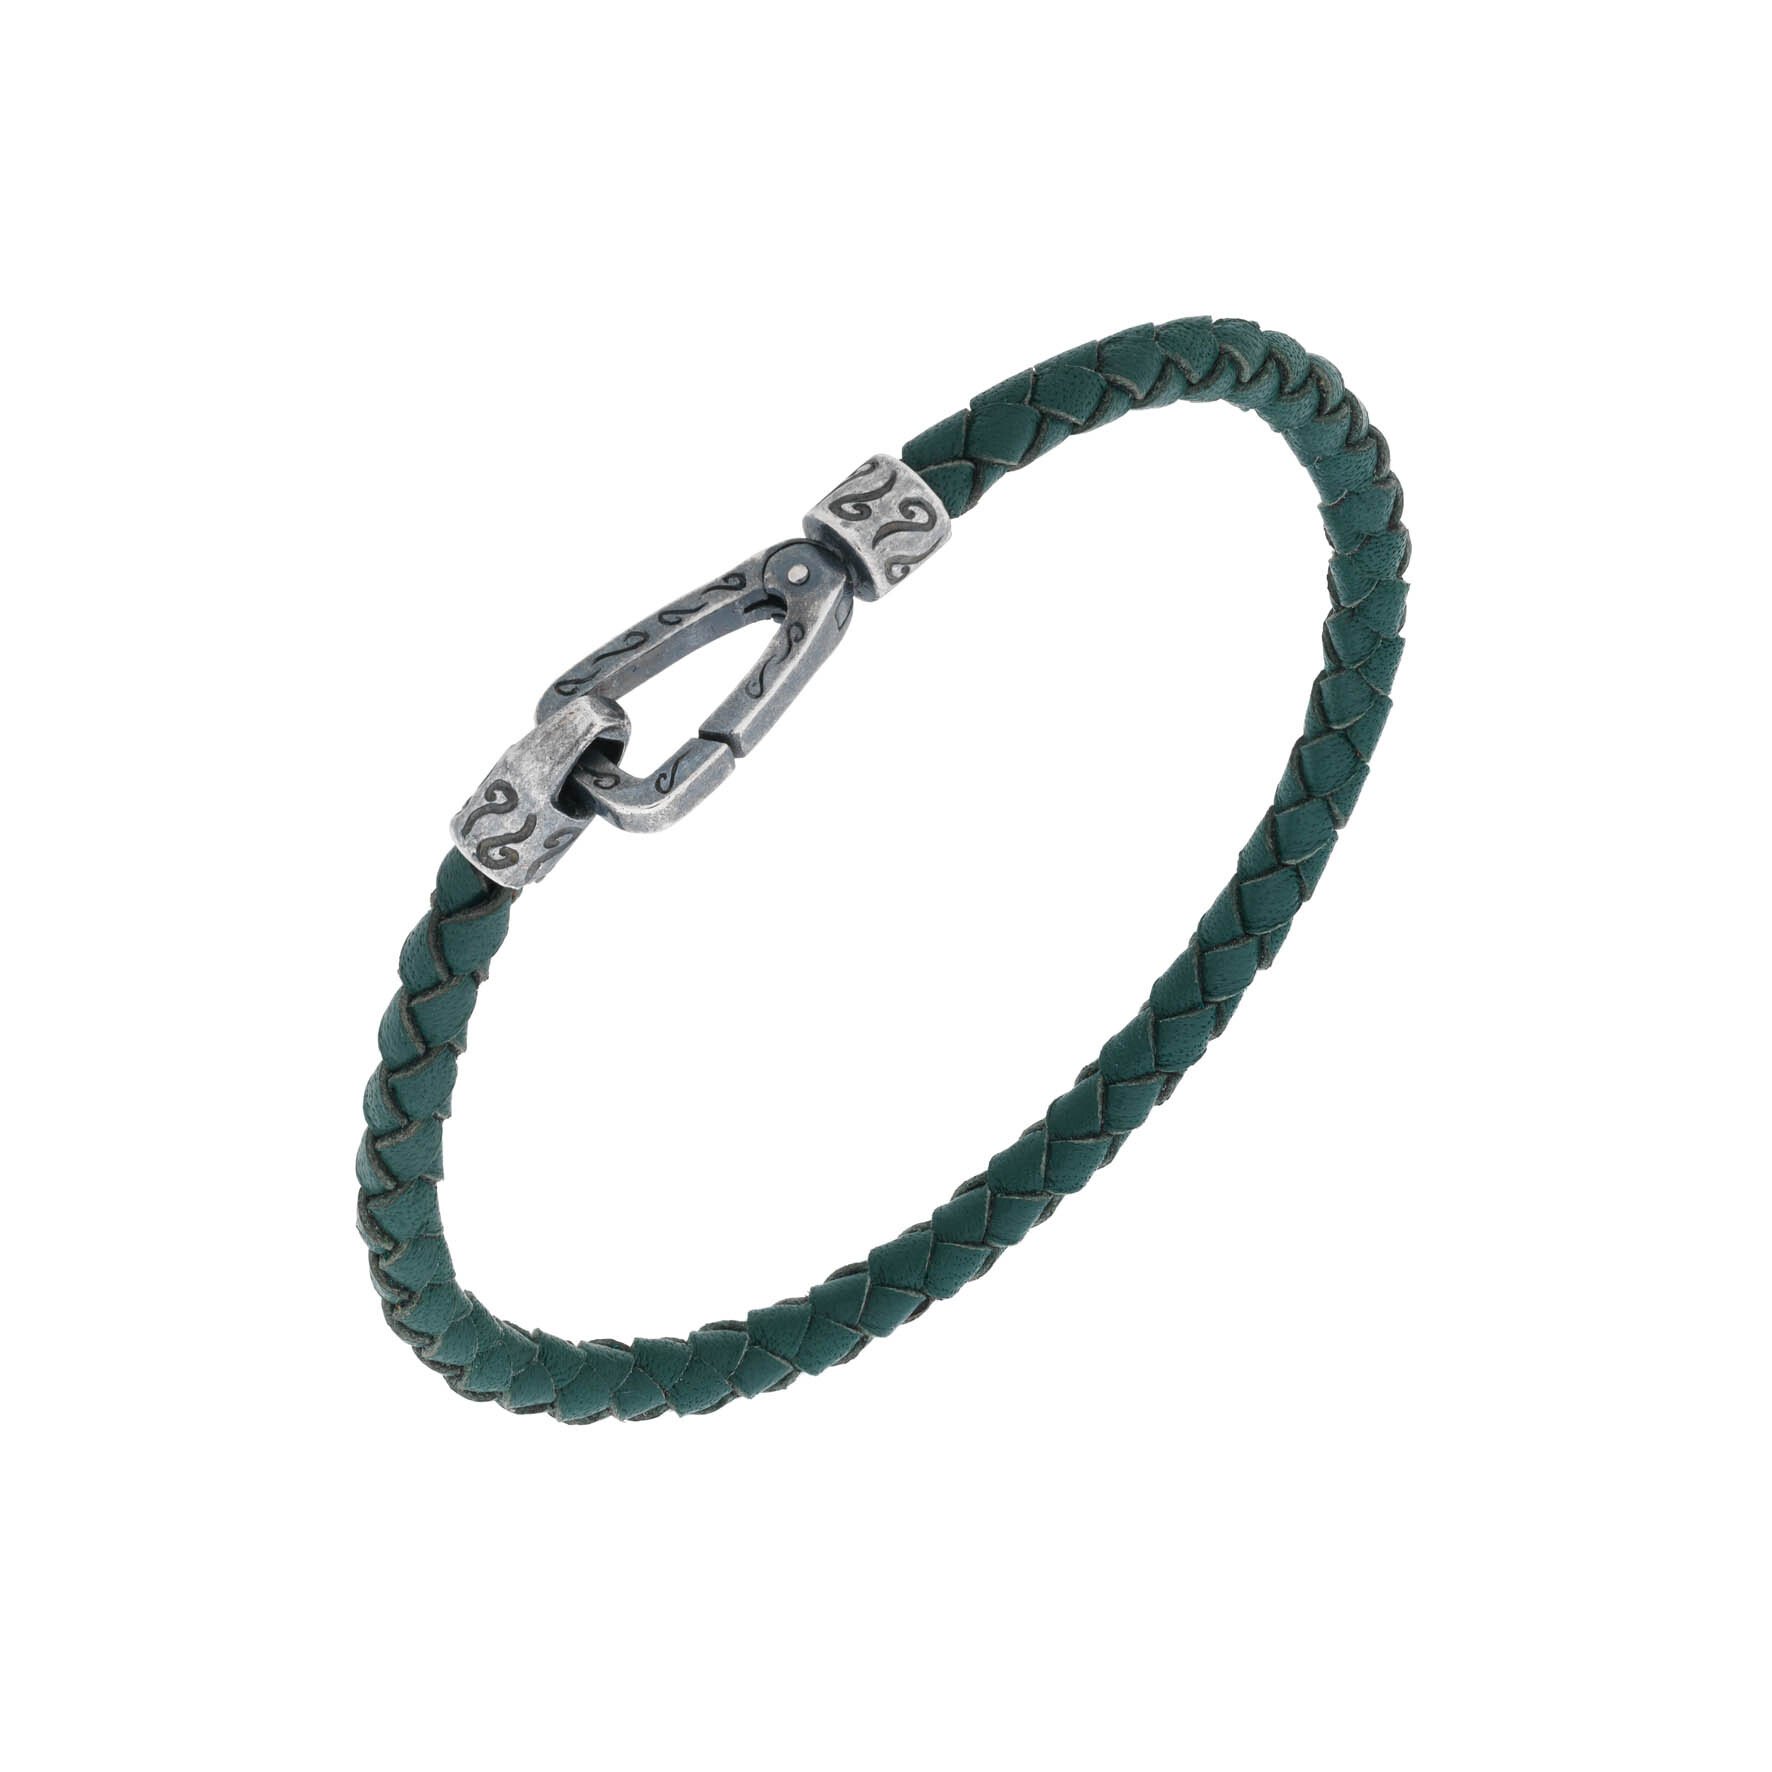 Lash Woven Bracelet, Oxidized Silver, Green Woven Leather